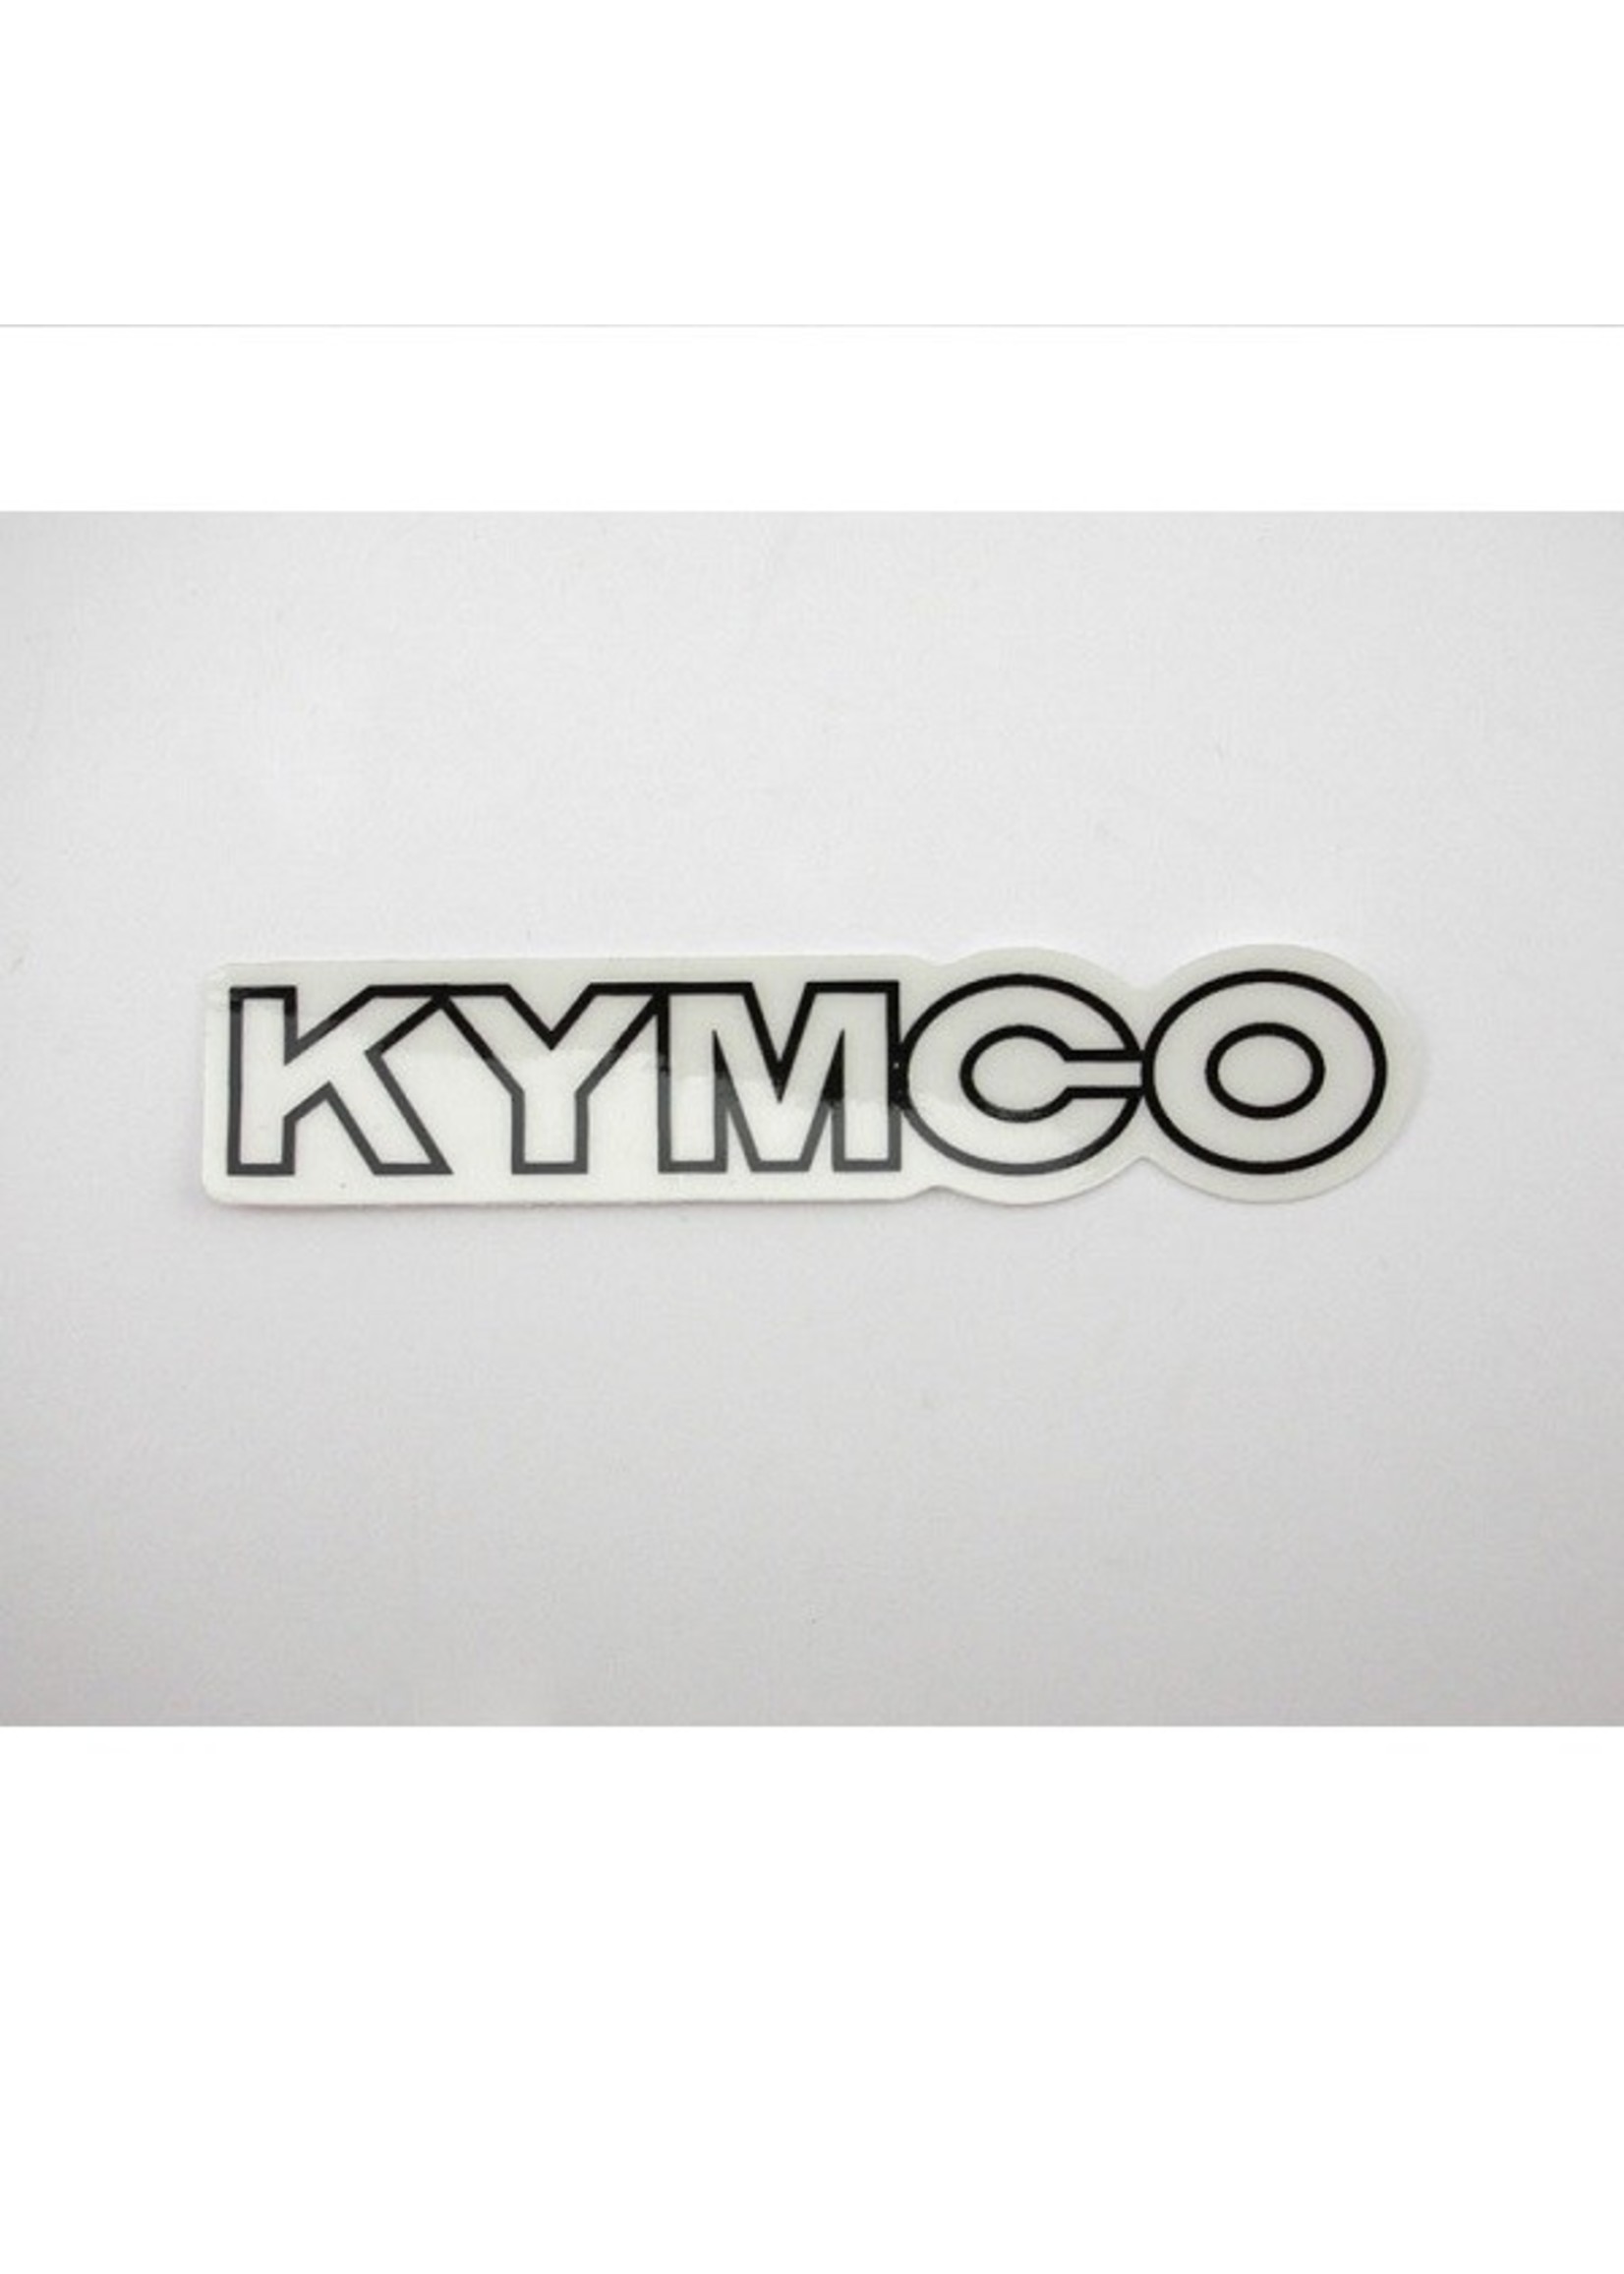 Kymco sticker beenschild woord [kymco] vp 50 wit diamant kymco orig 87140-lfc8-e80-t02